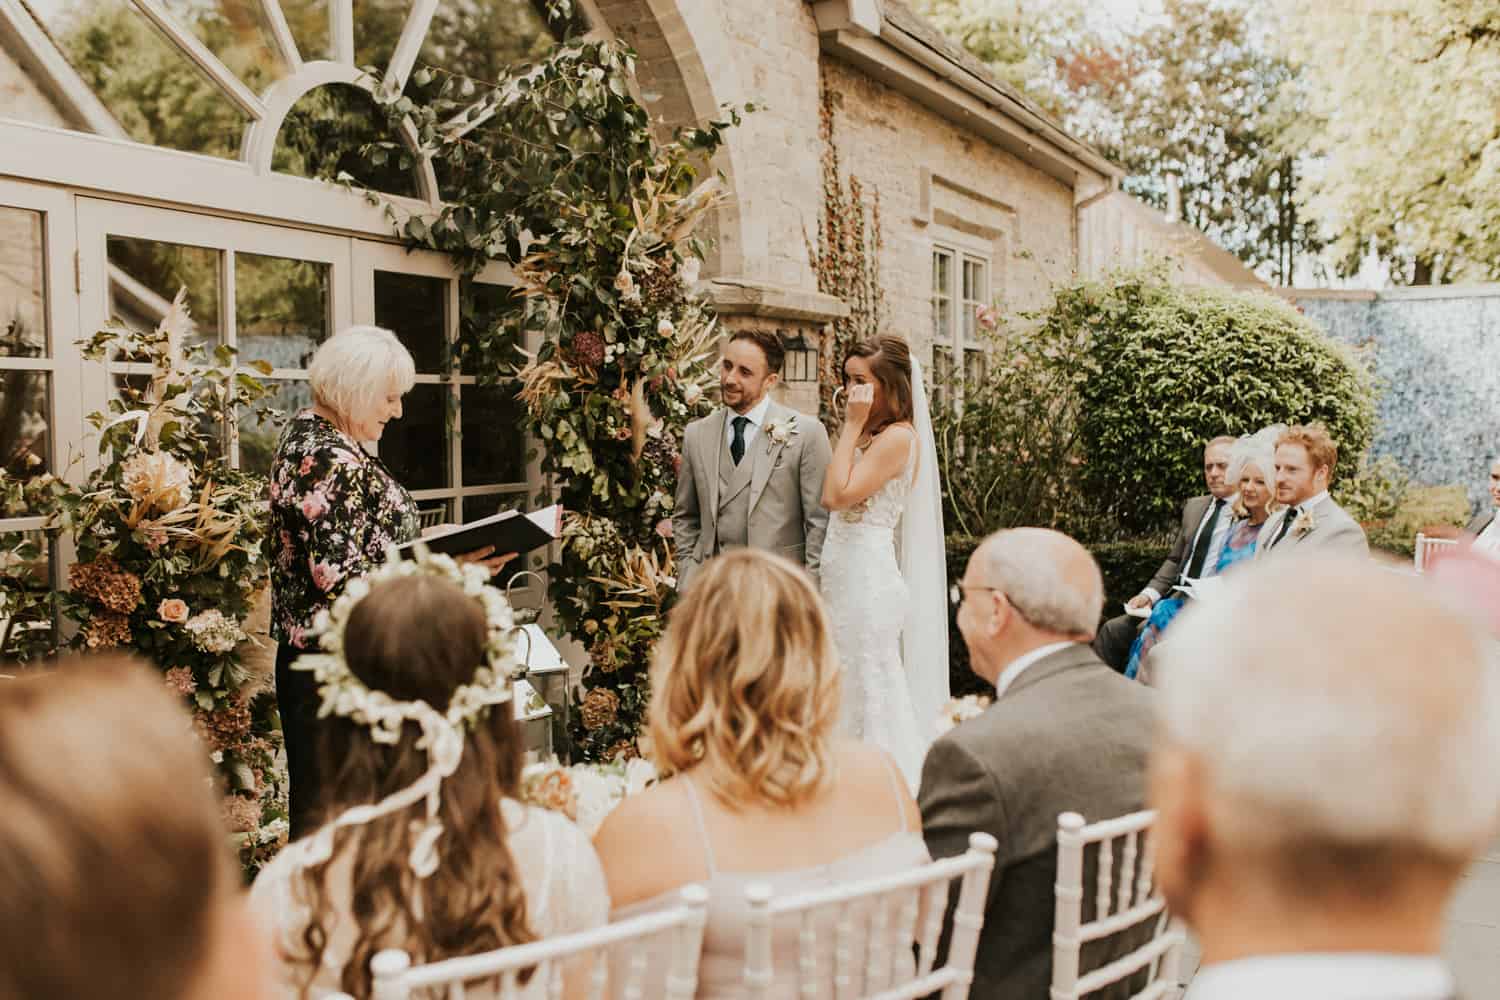 Top 5 Tips when choosing your Wedding Celebrant!